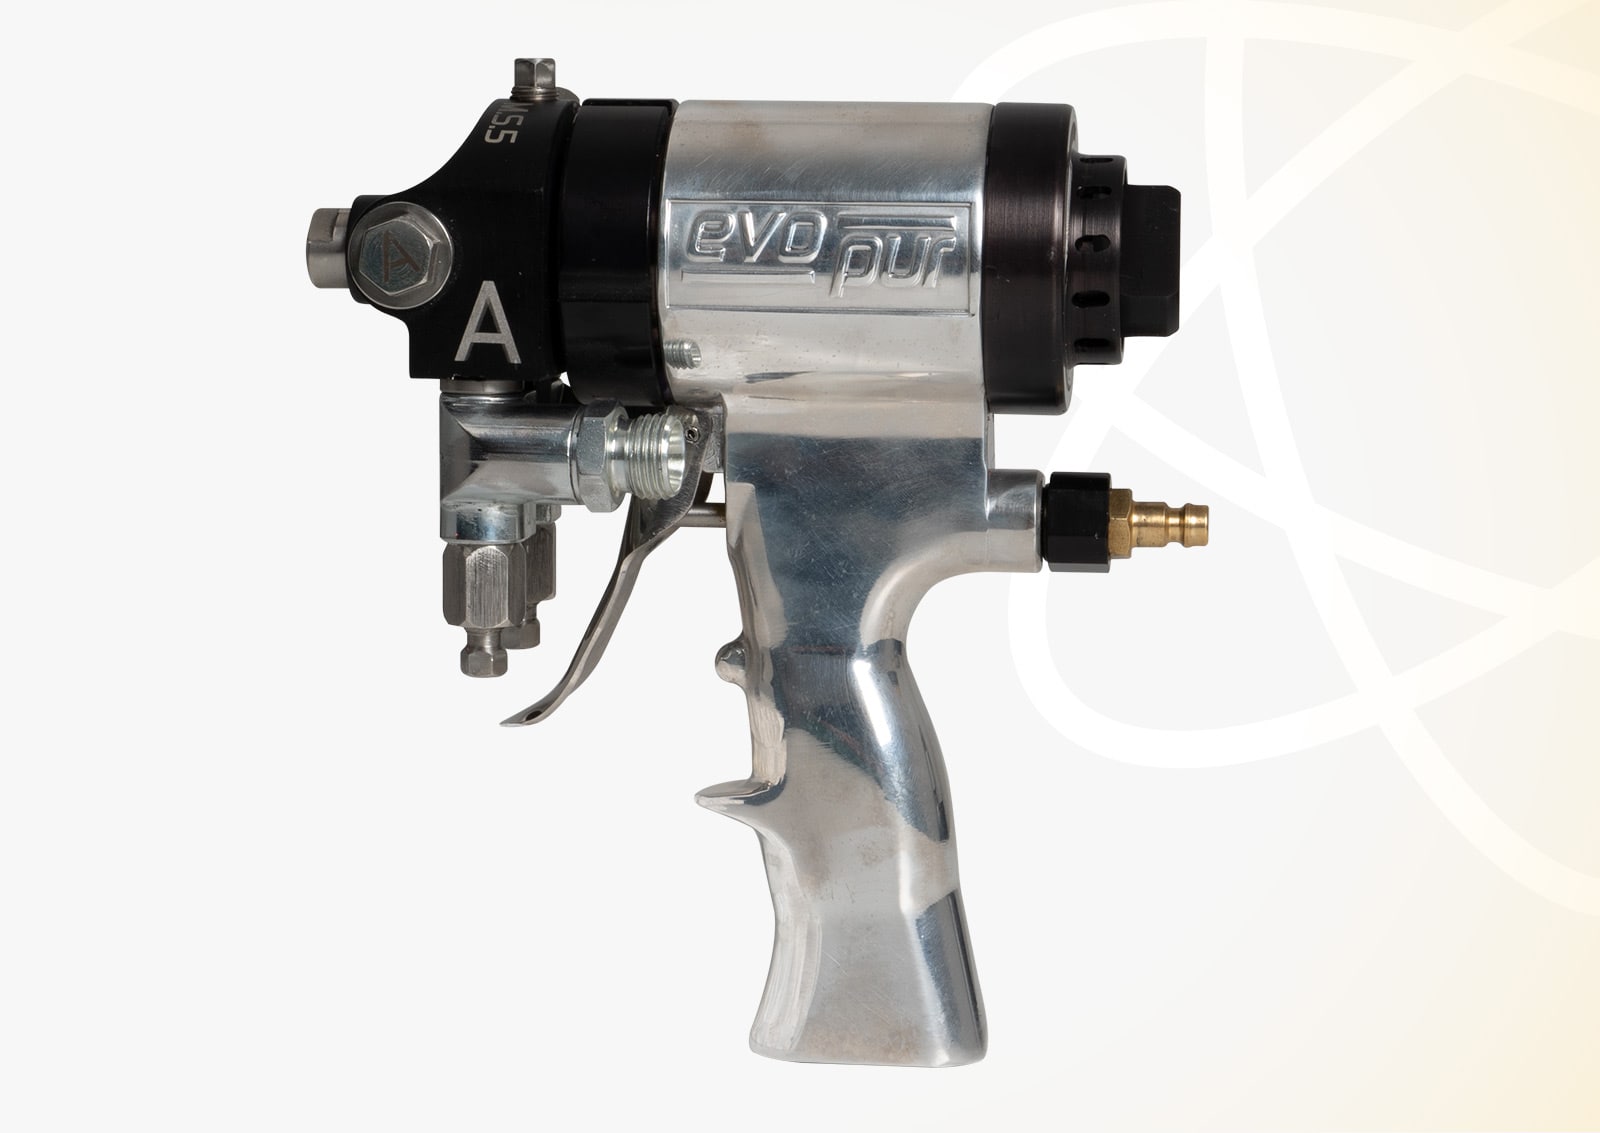 Multi Spray 5 Polyurethane Spray Foam & Polyurea Insulation Gun